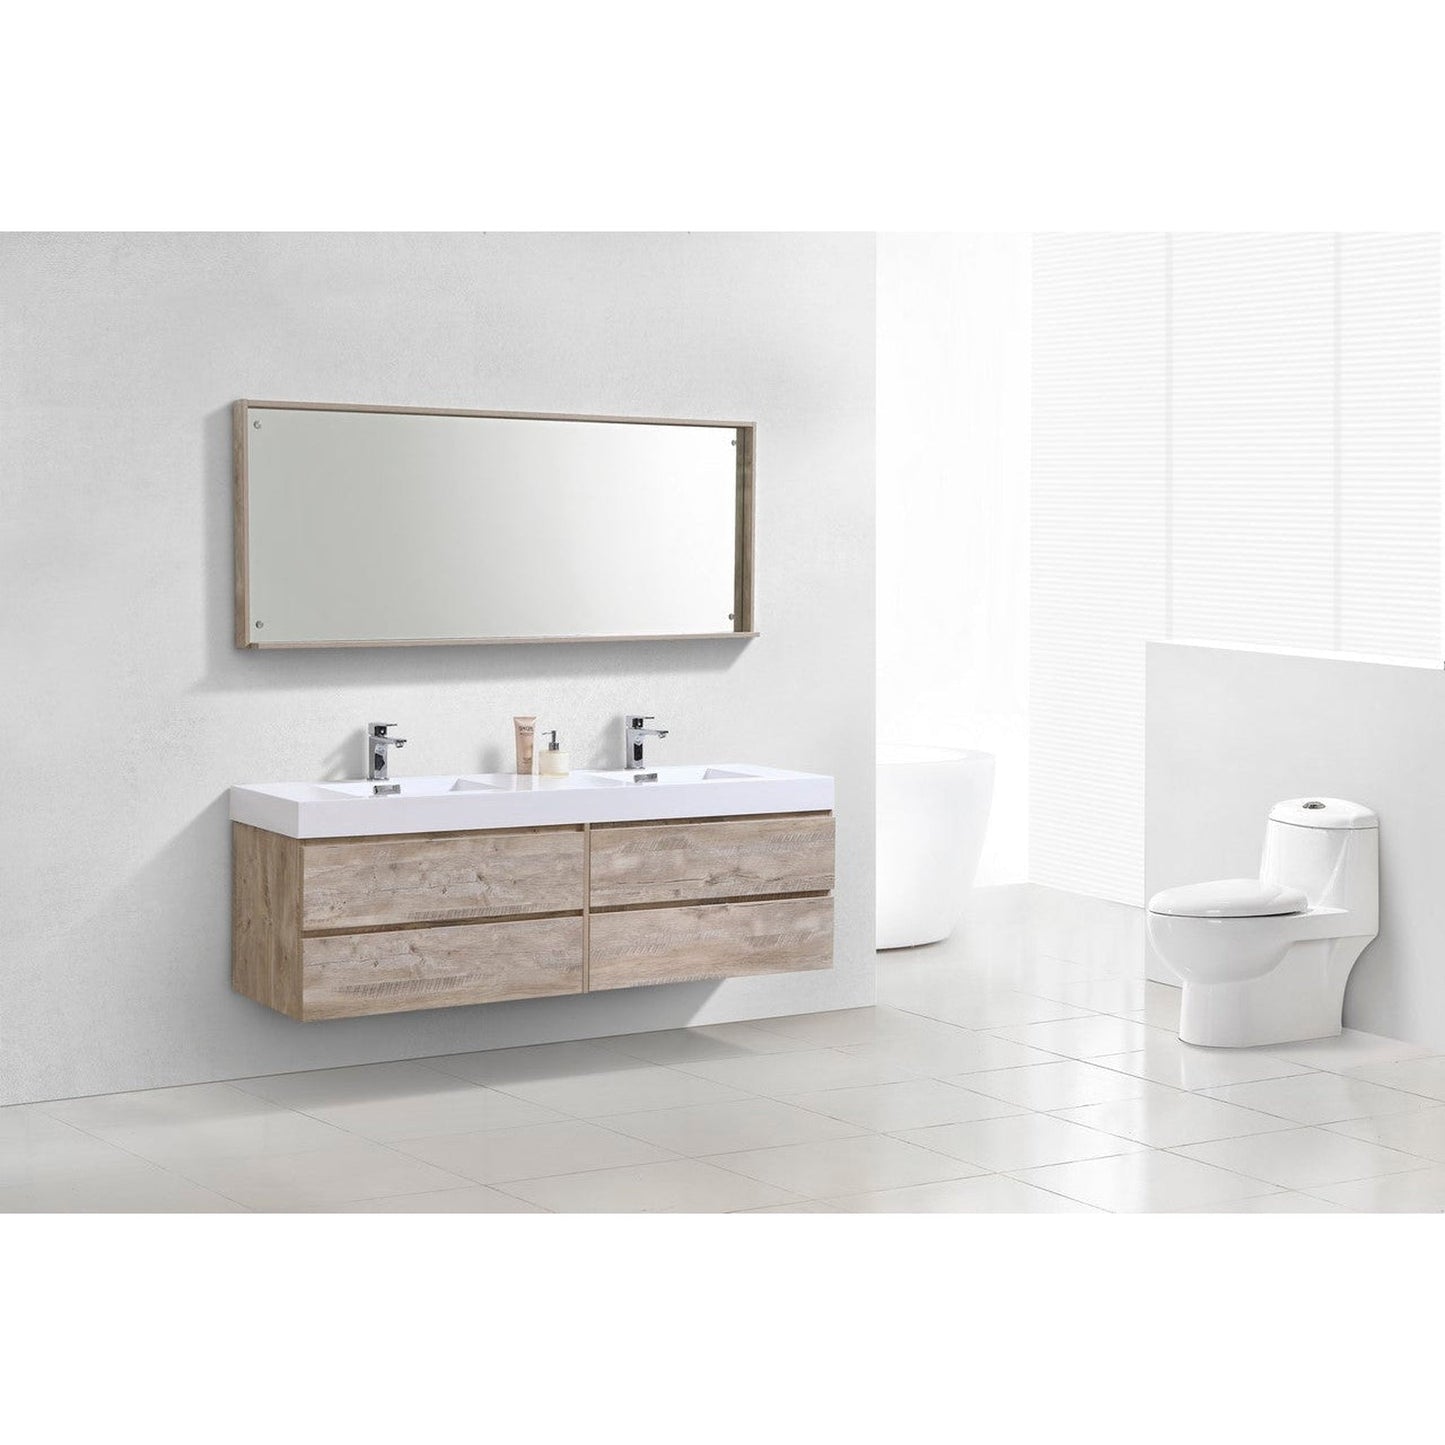 KubeBath Bliss 72" Nature Wood Wall-Mounted Modern Bathroom Vanity With Double Integrated Acrylic Sink With Overflow